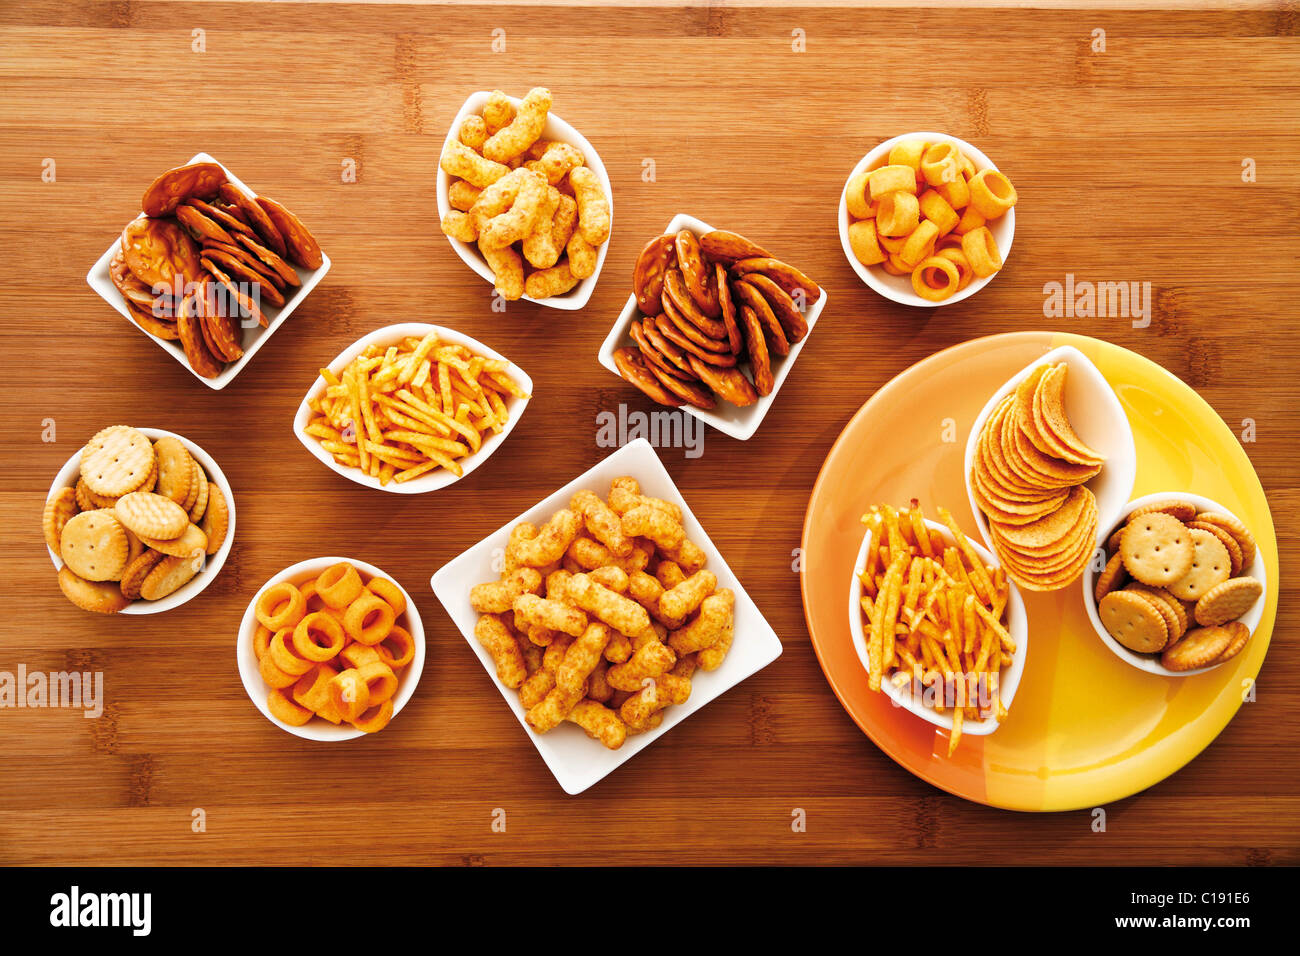 Various spiced snacks in bowls on a table, crisps, peanut flips, potato sticks, roasted peanuts, pretzel sticks and potato rings Stock Photo